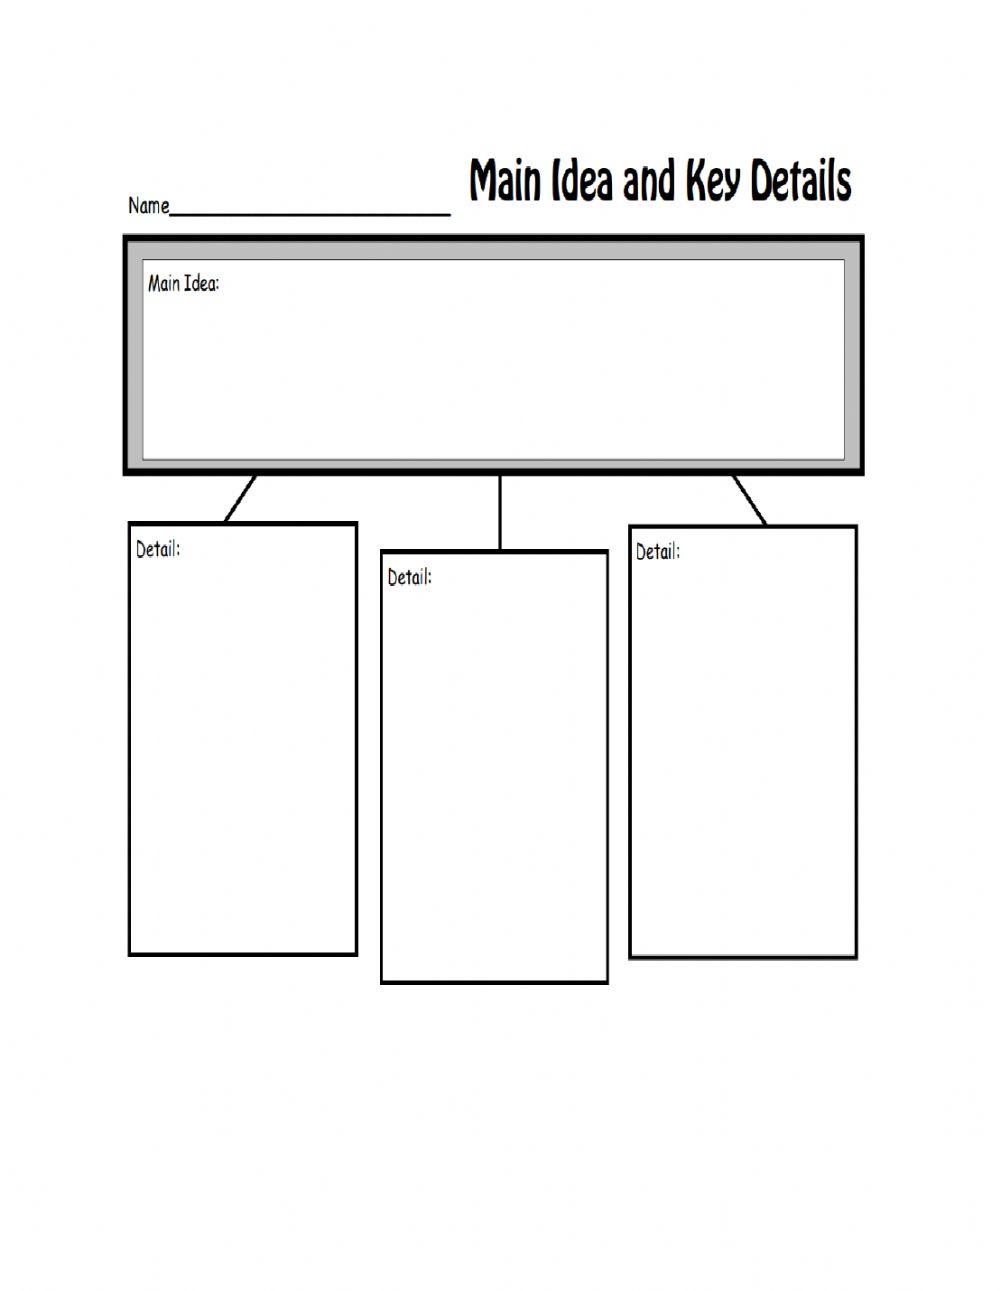 Main Idea and Key Details Graphic Organizer worksheet